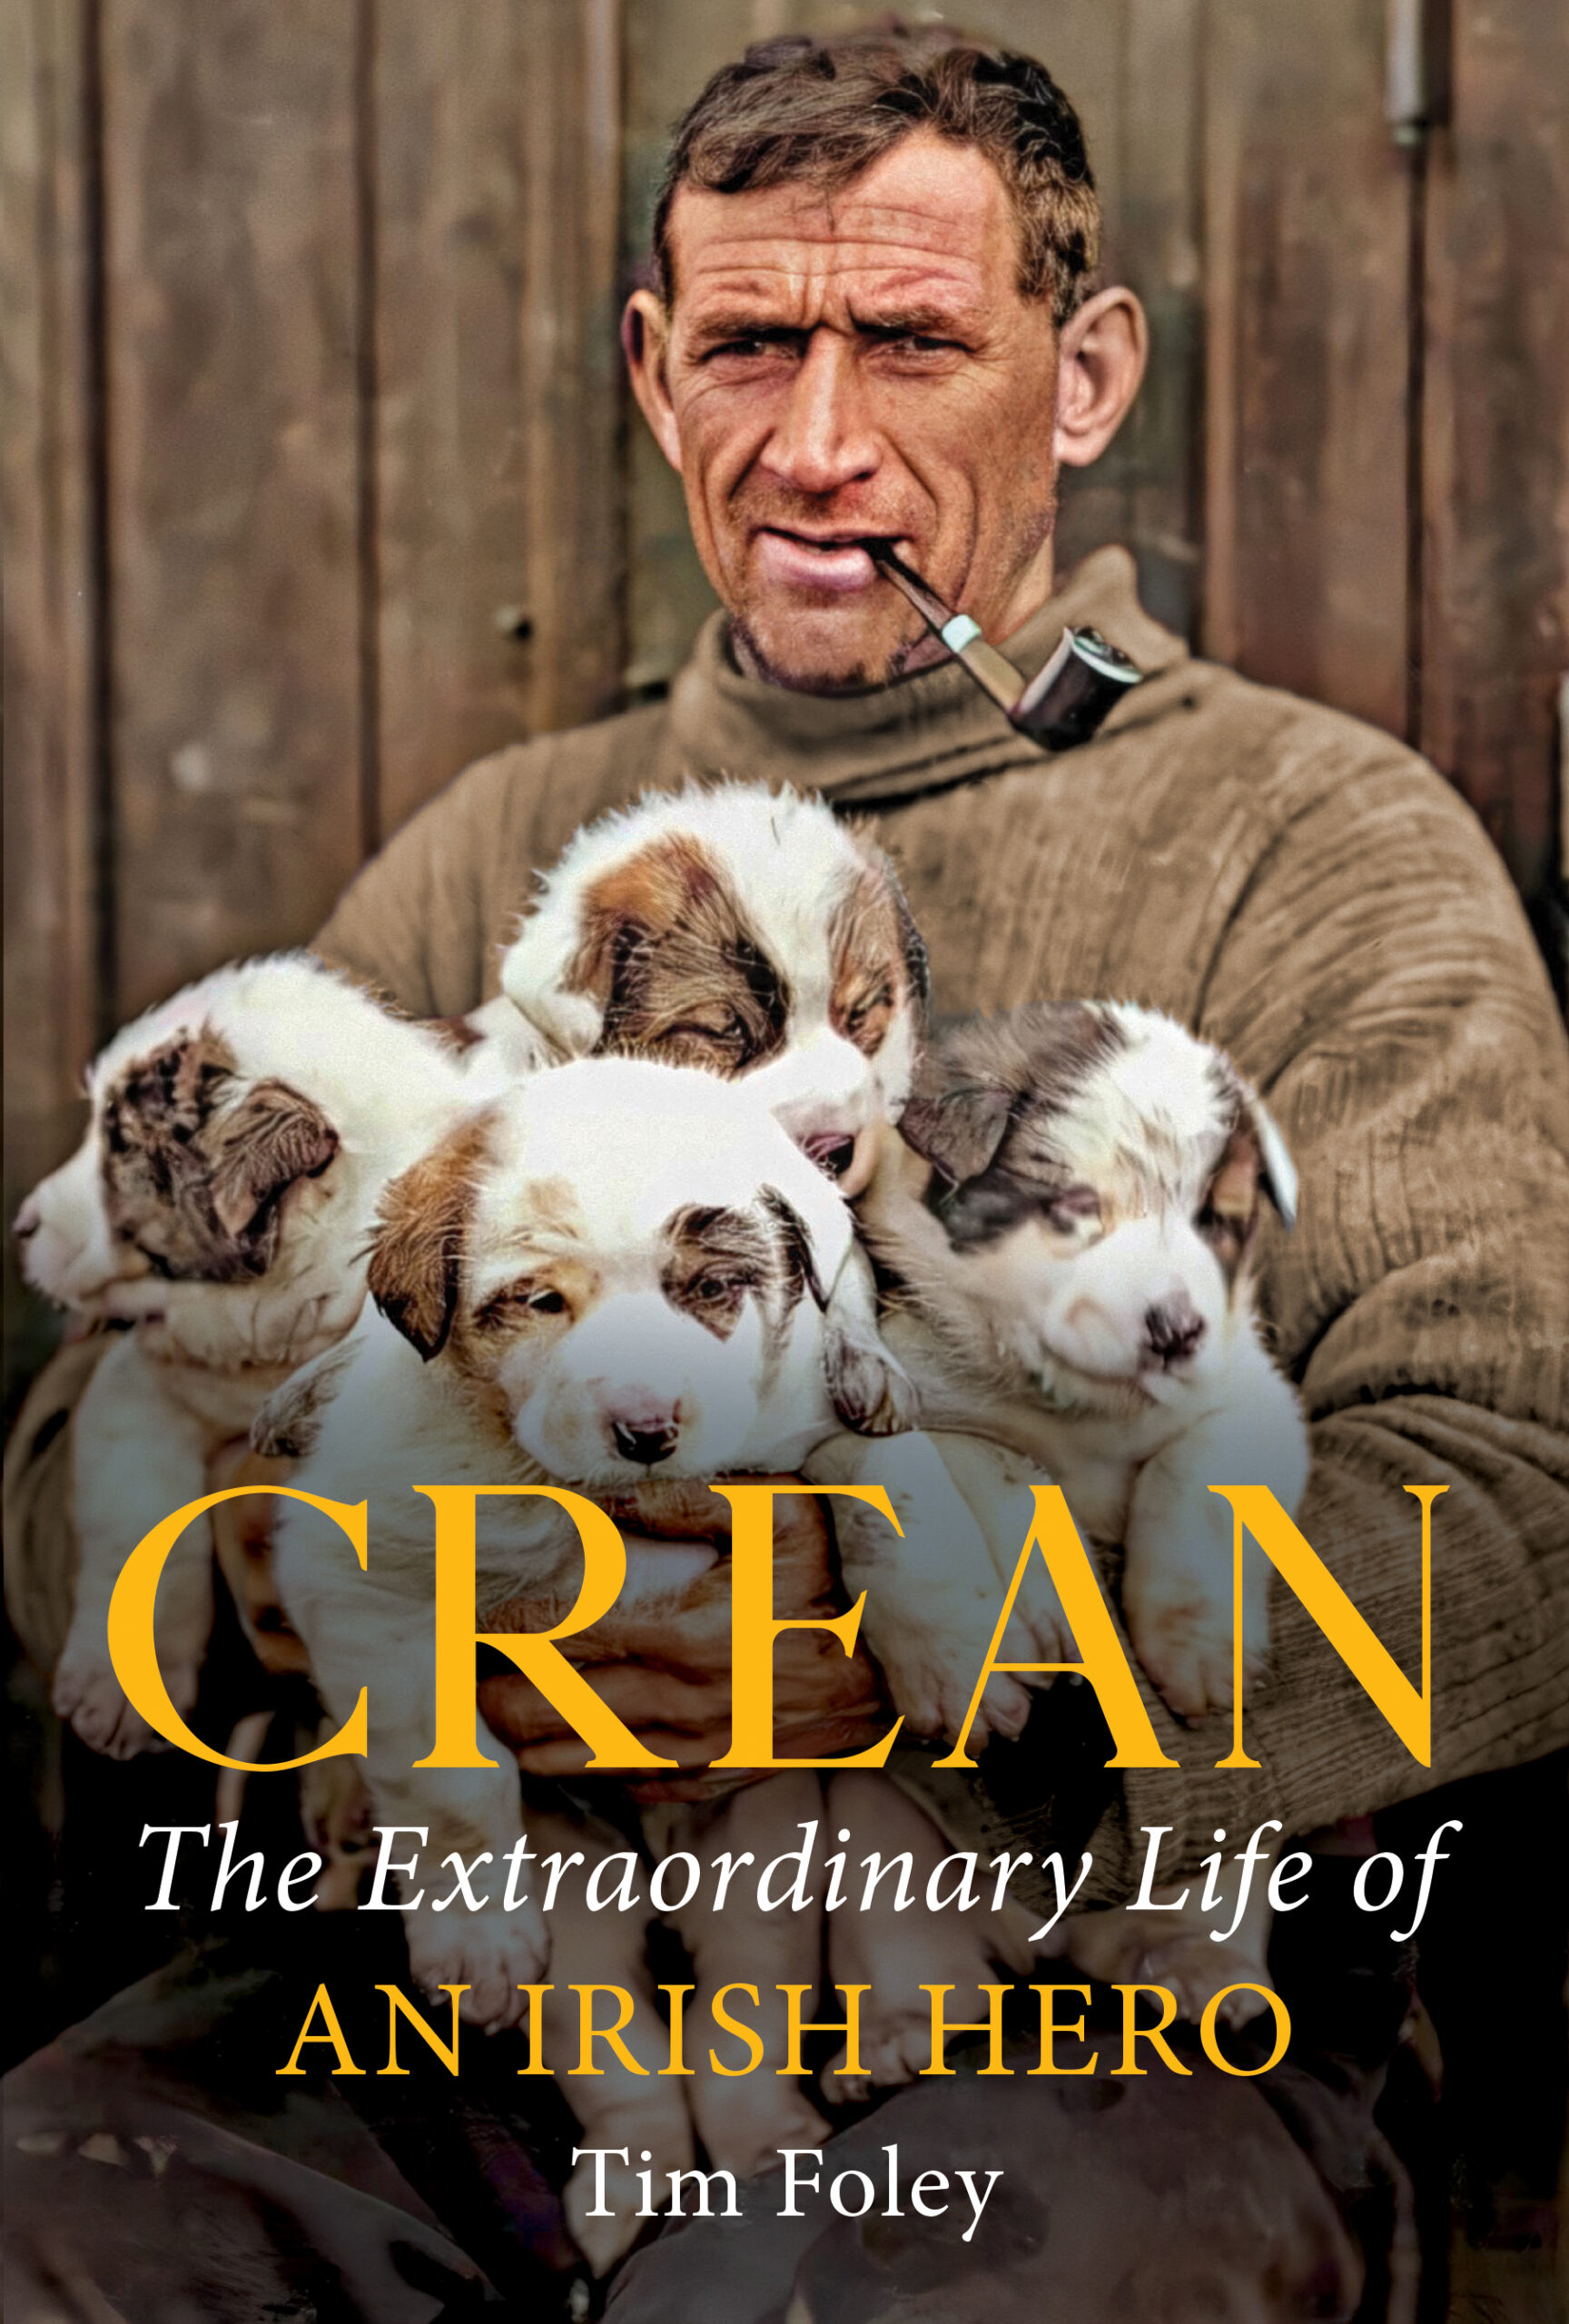 Crean: The Extraordinary Life of an Irish Hero by Tim Foley